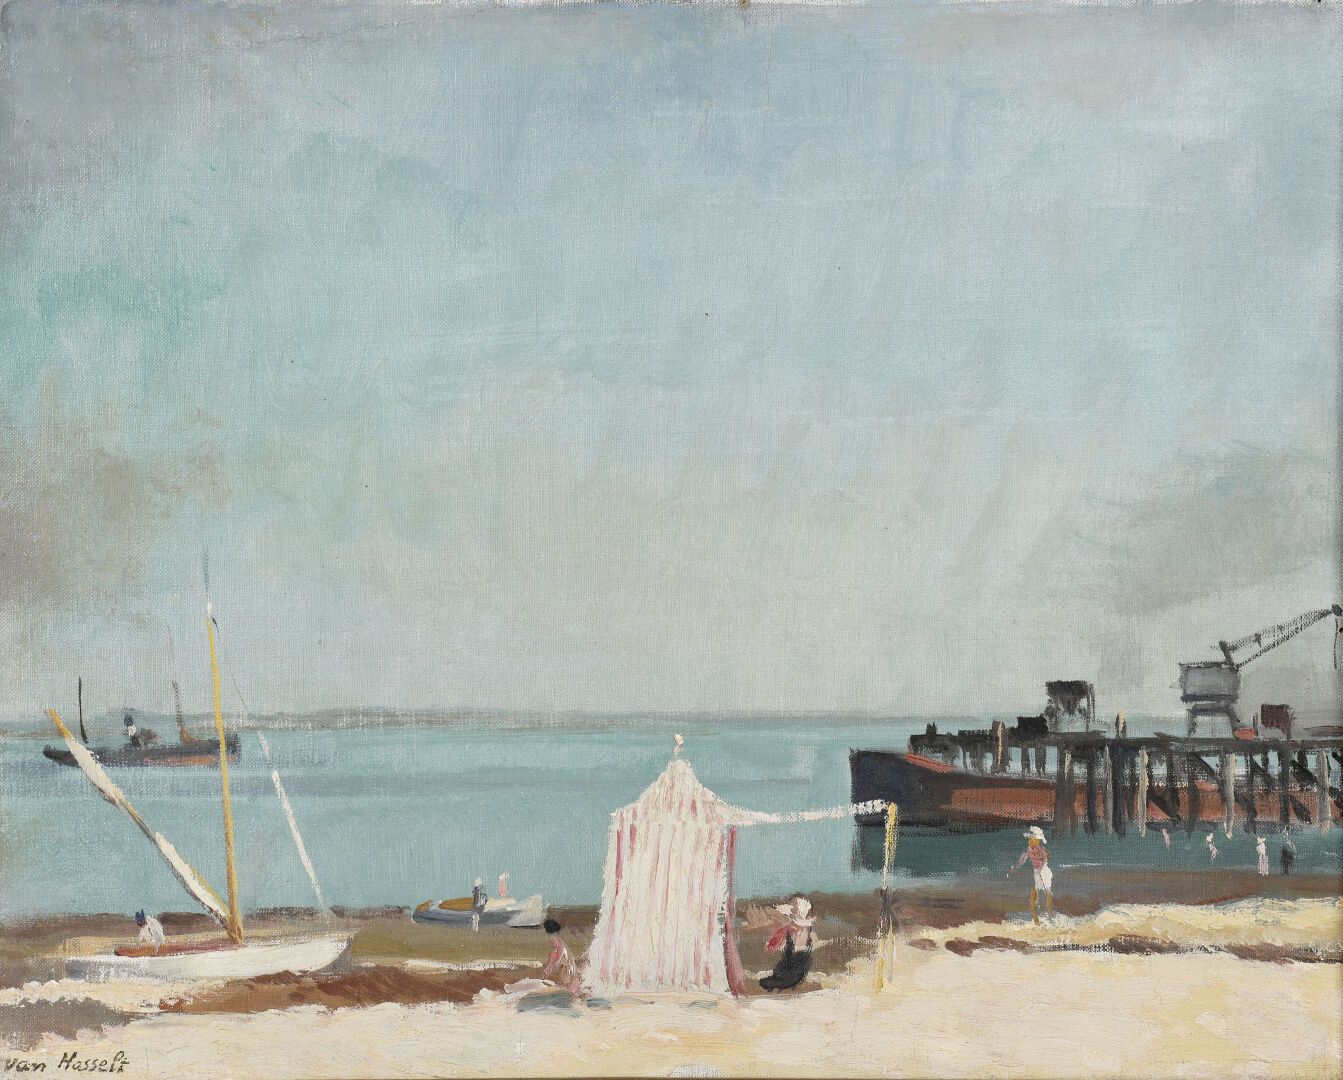 Null 威廉-范-哈塞尔(Willem VAN HASSELT) (1882-1963)
海边 
布面油画，左下方有签名。
33 x 41,5 cm